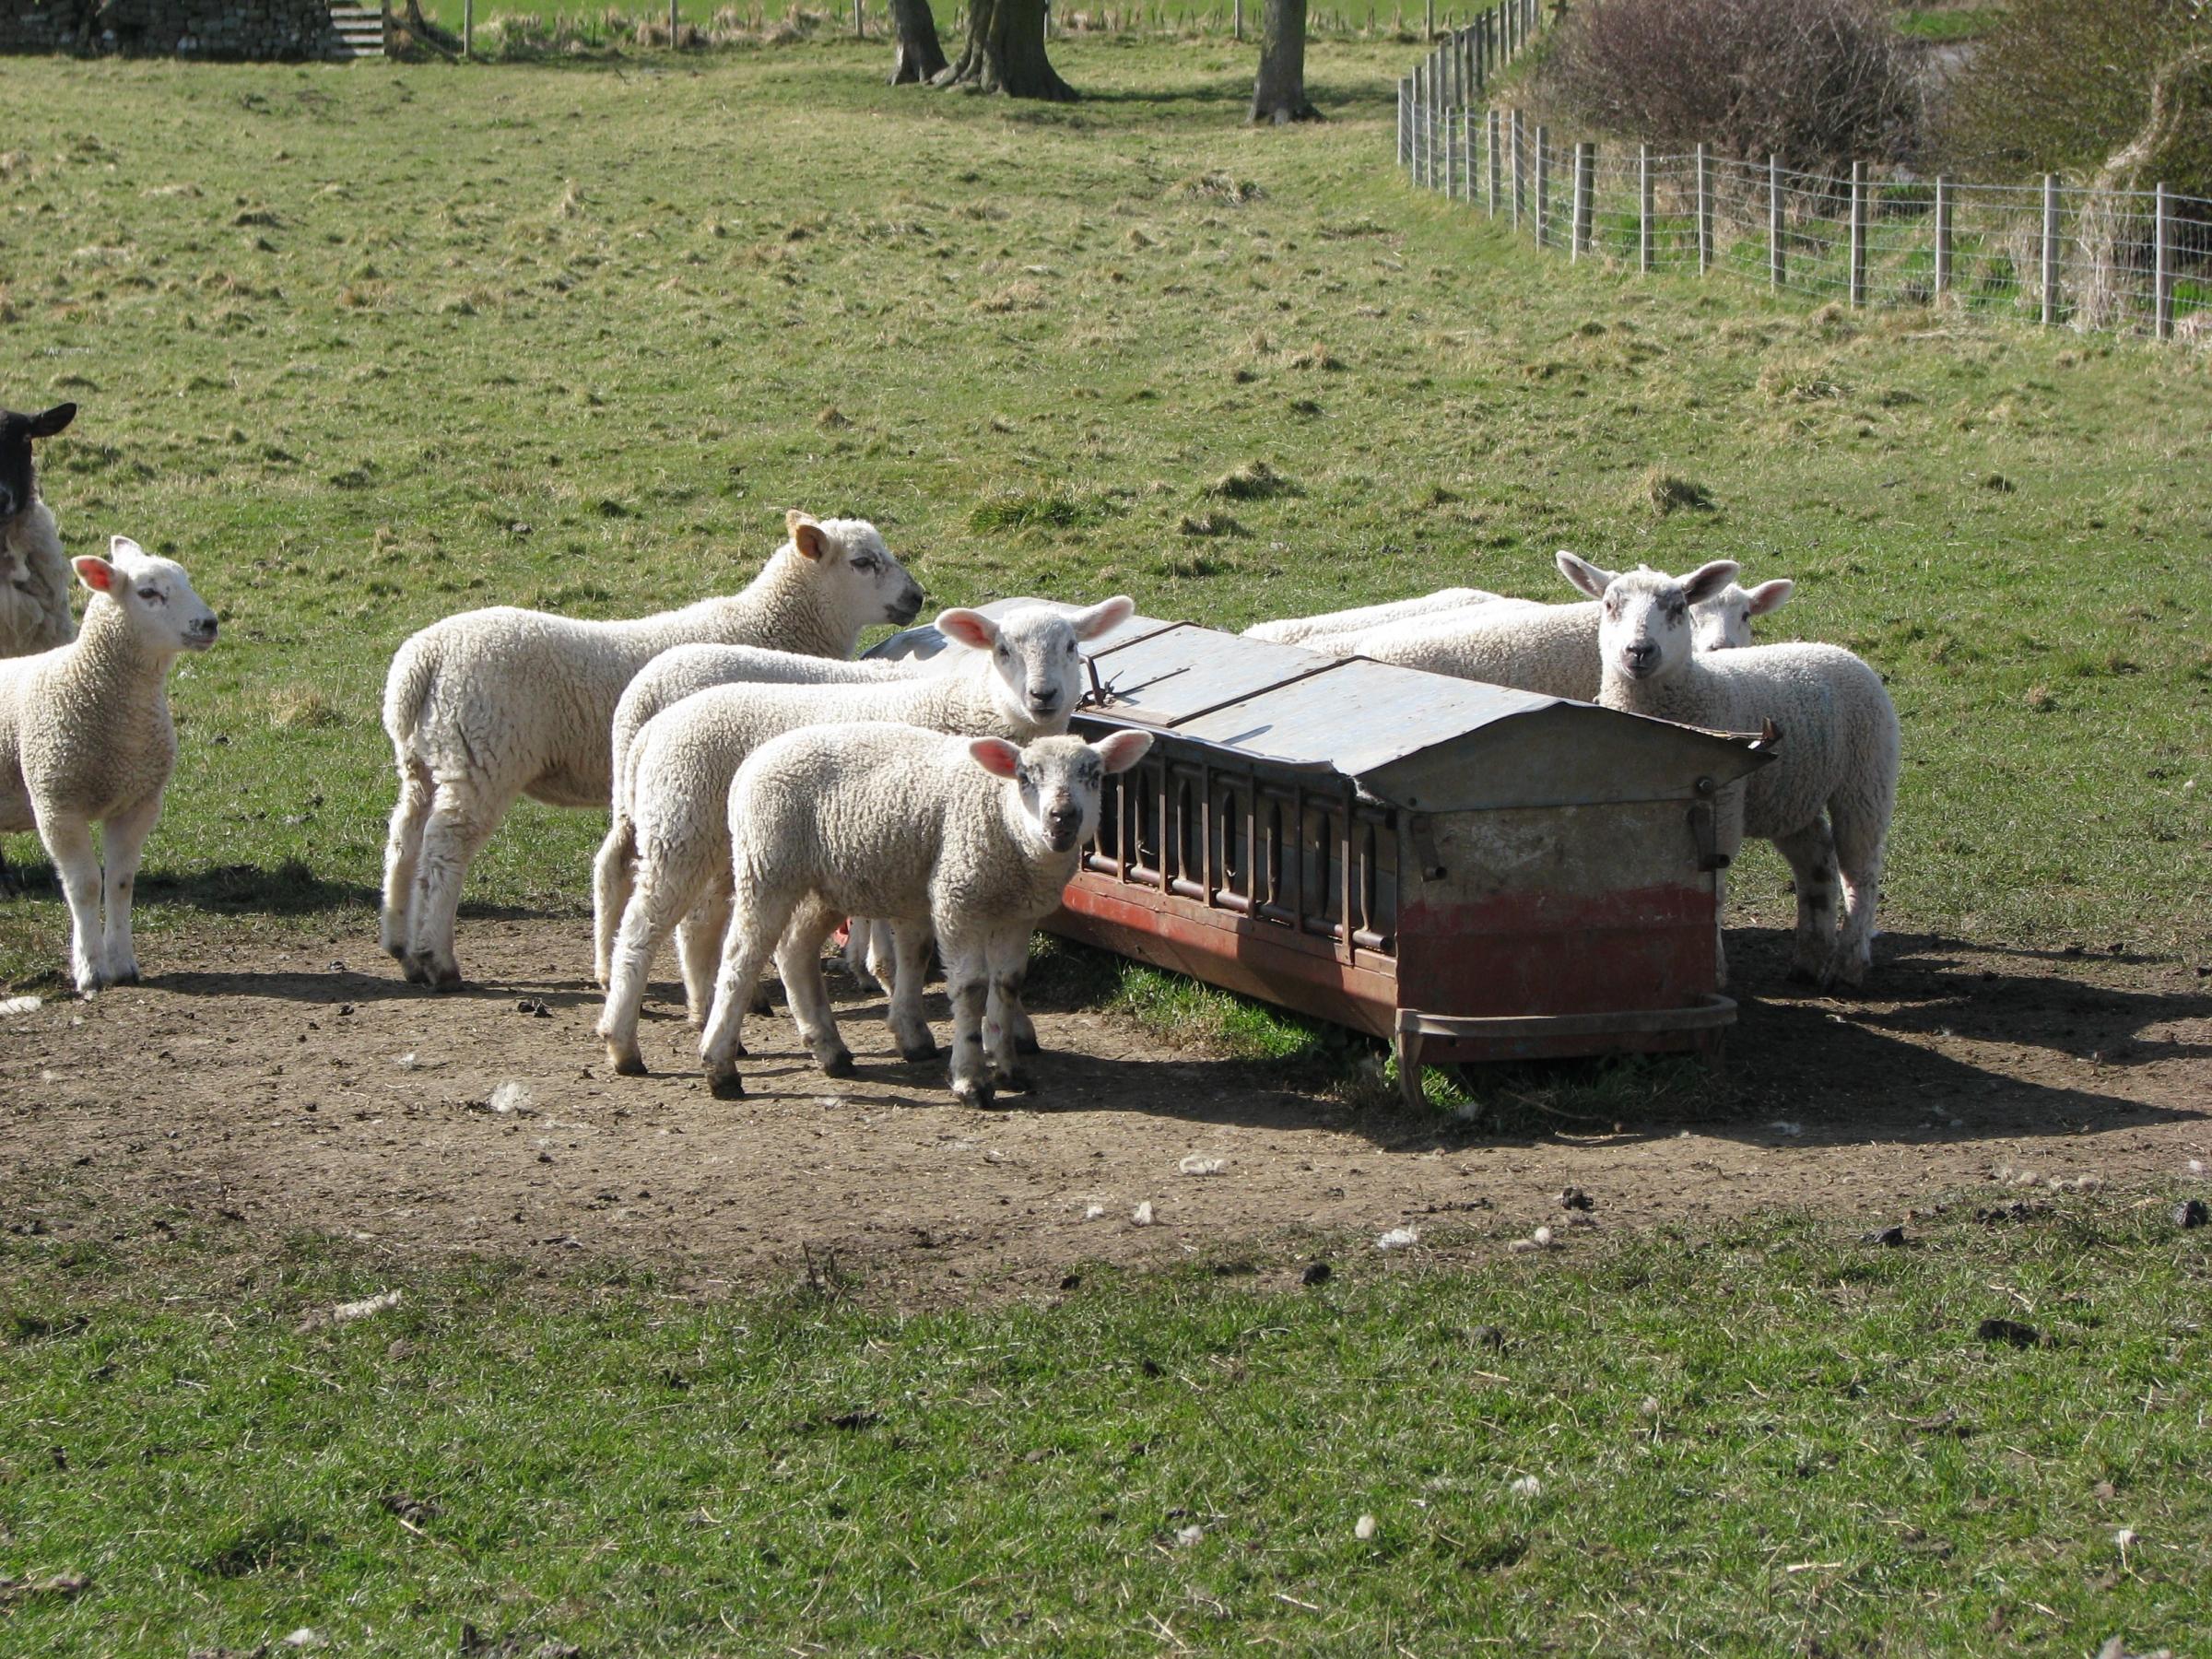 Creep feeding lambs help them maintain a healthy weight